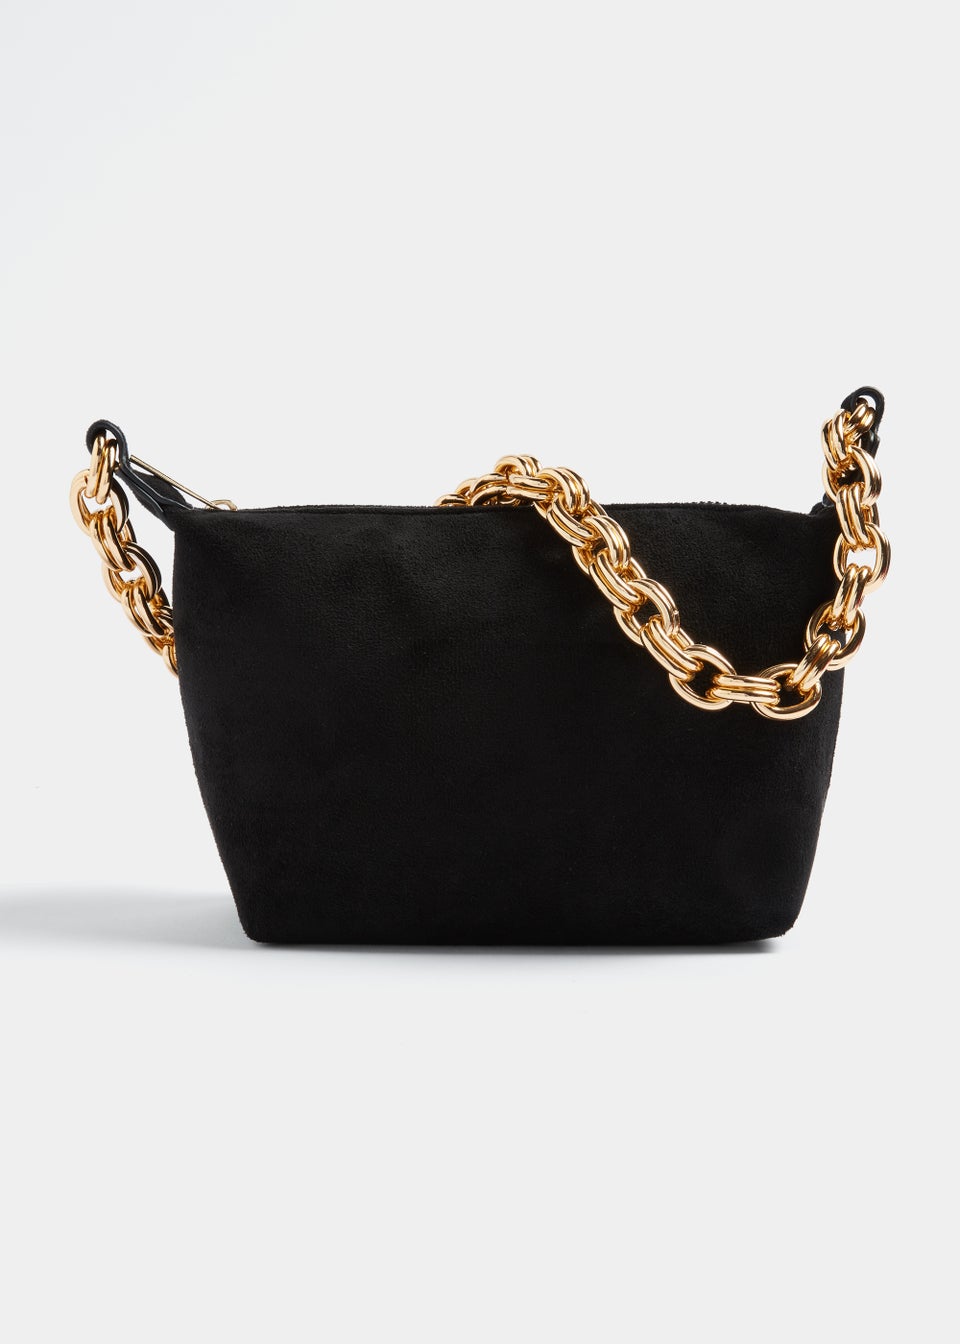 UGG black suede handbag | Black suede handbag, Suede handbags, Black uggs